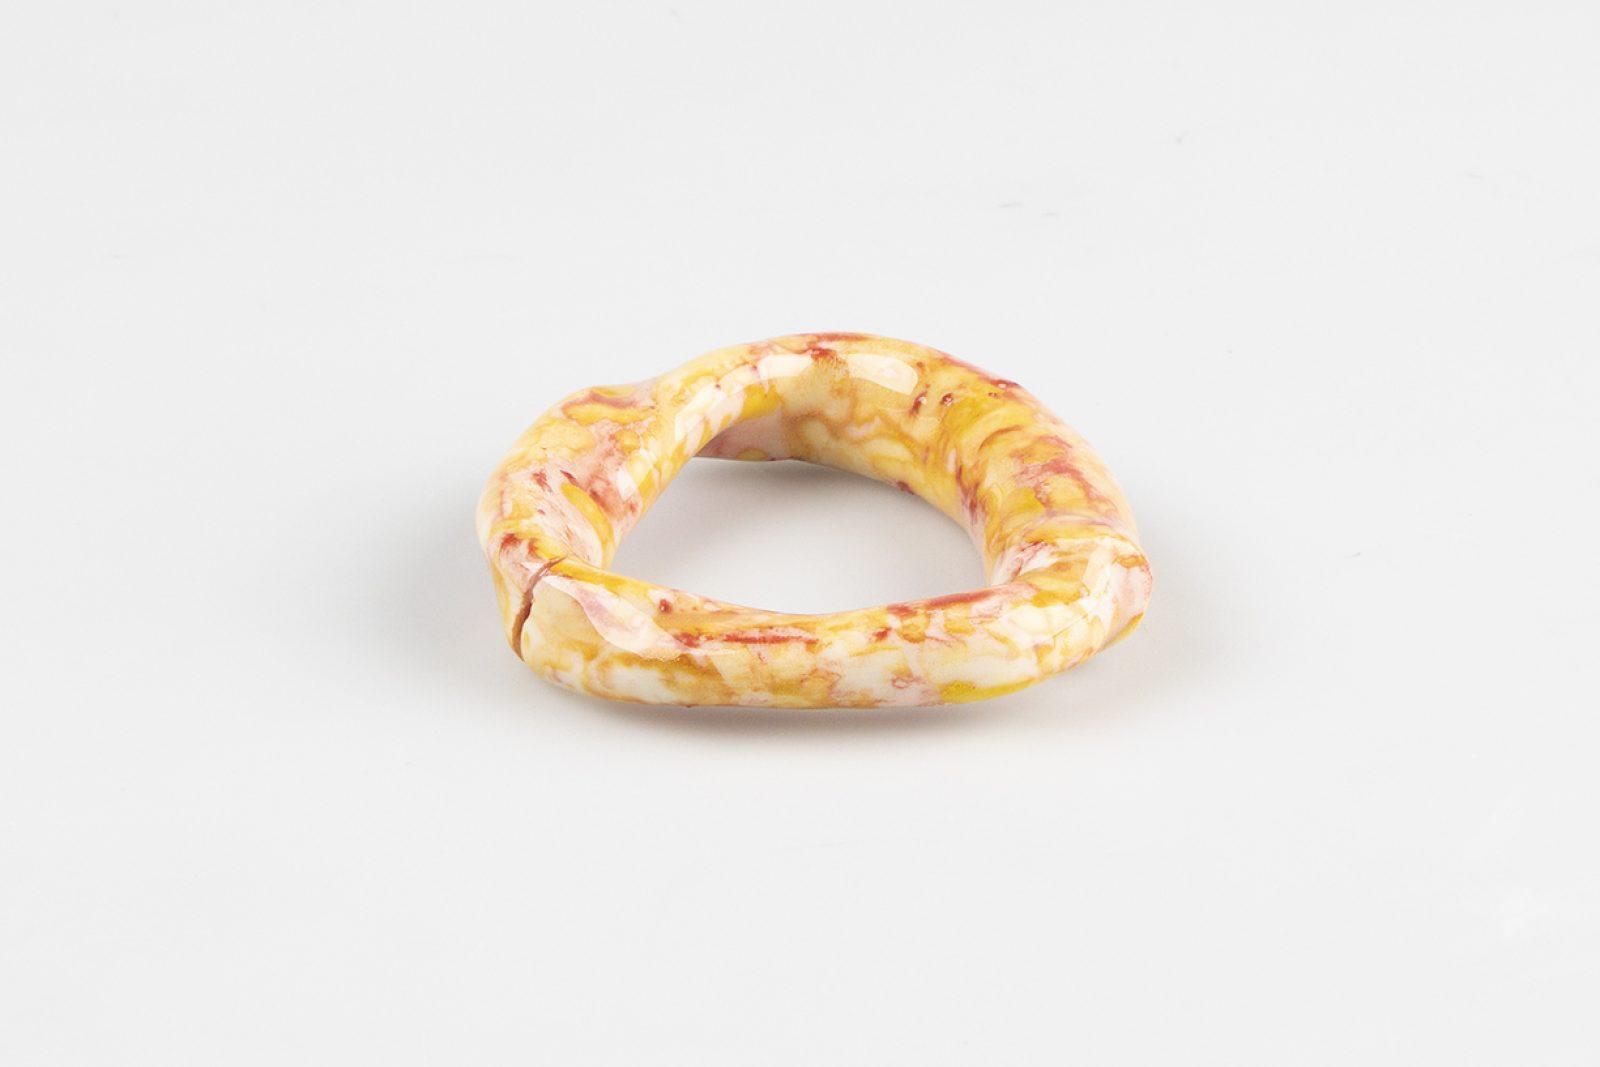 Child’s Bracelet in the Form of a Snake